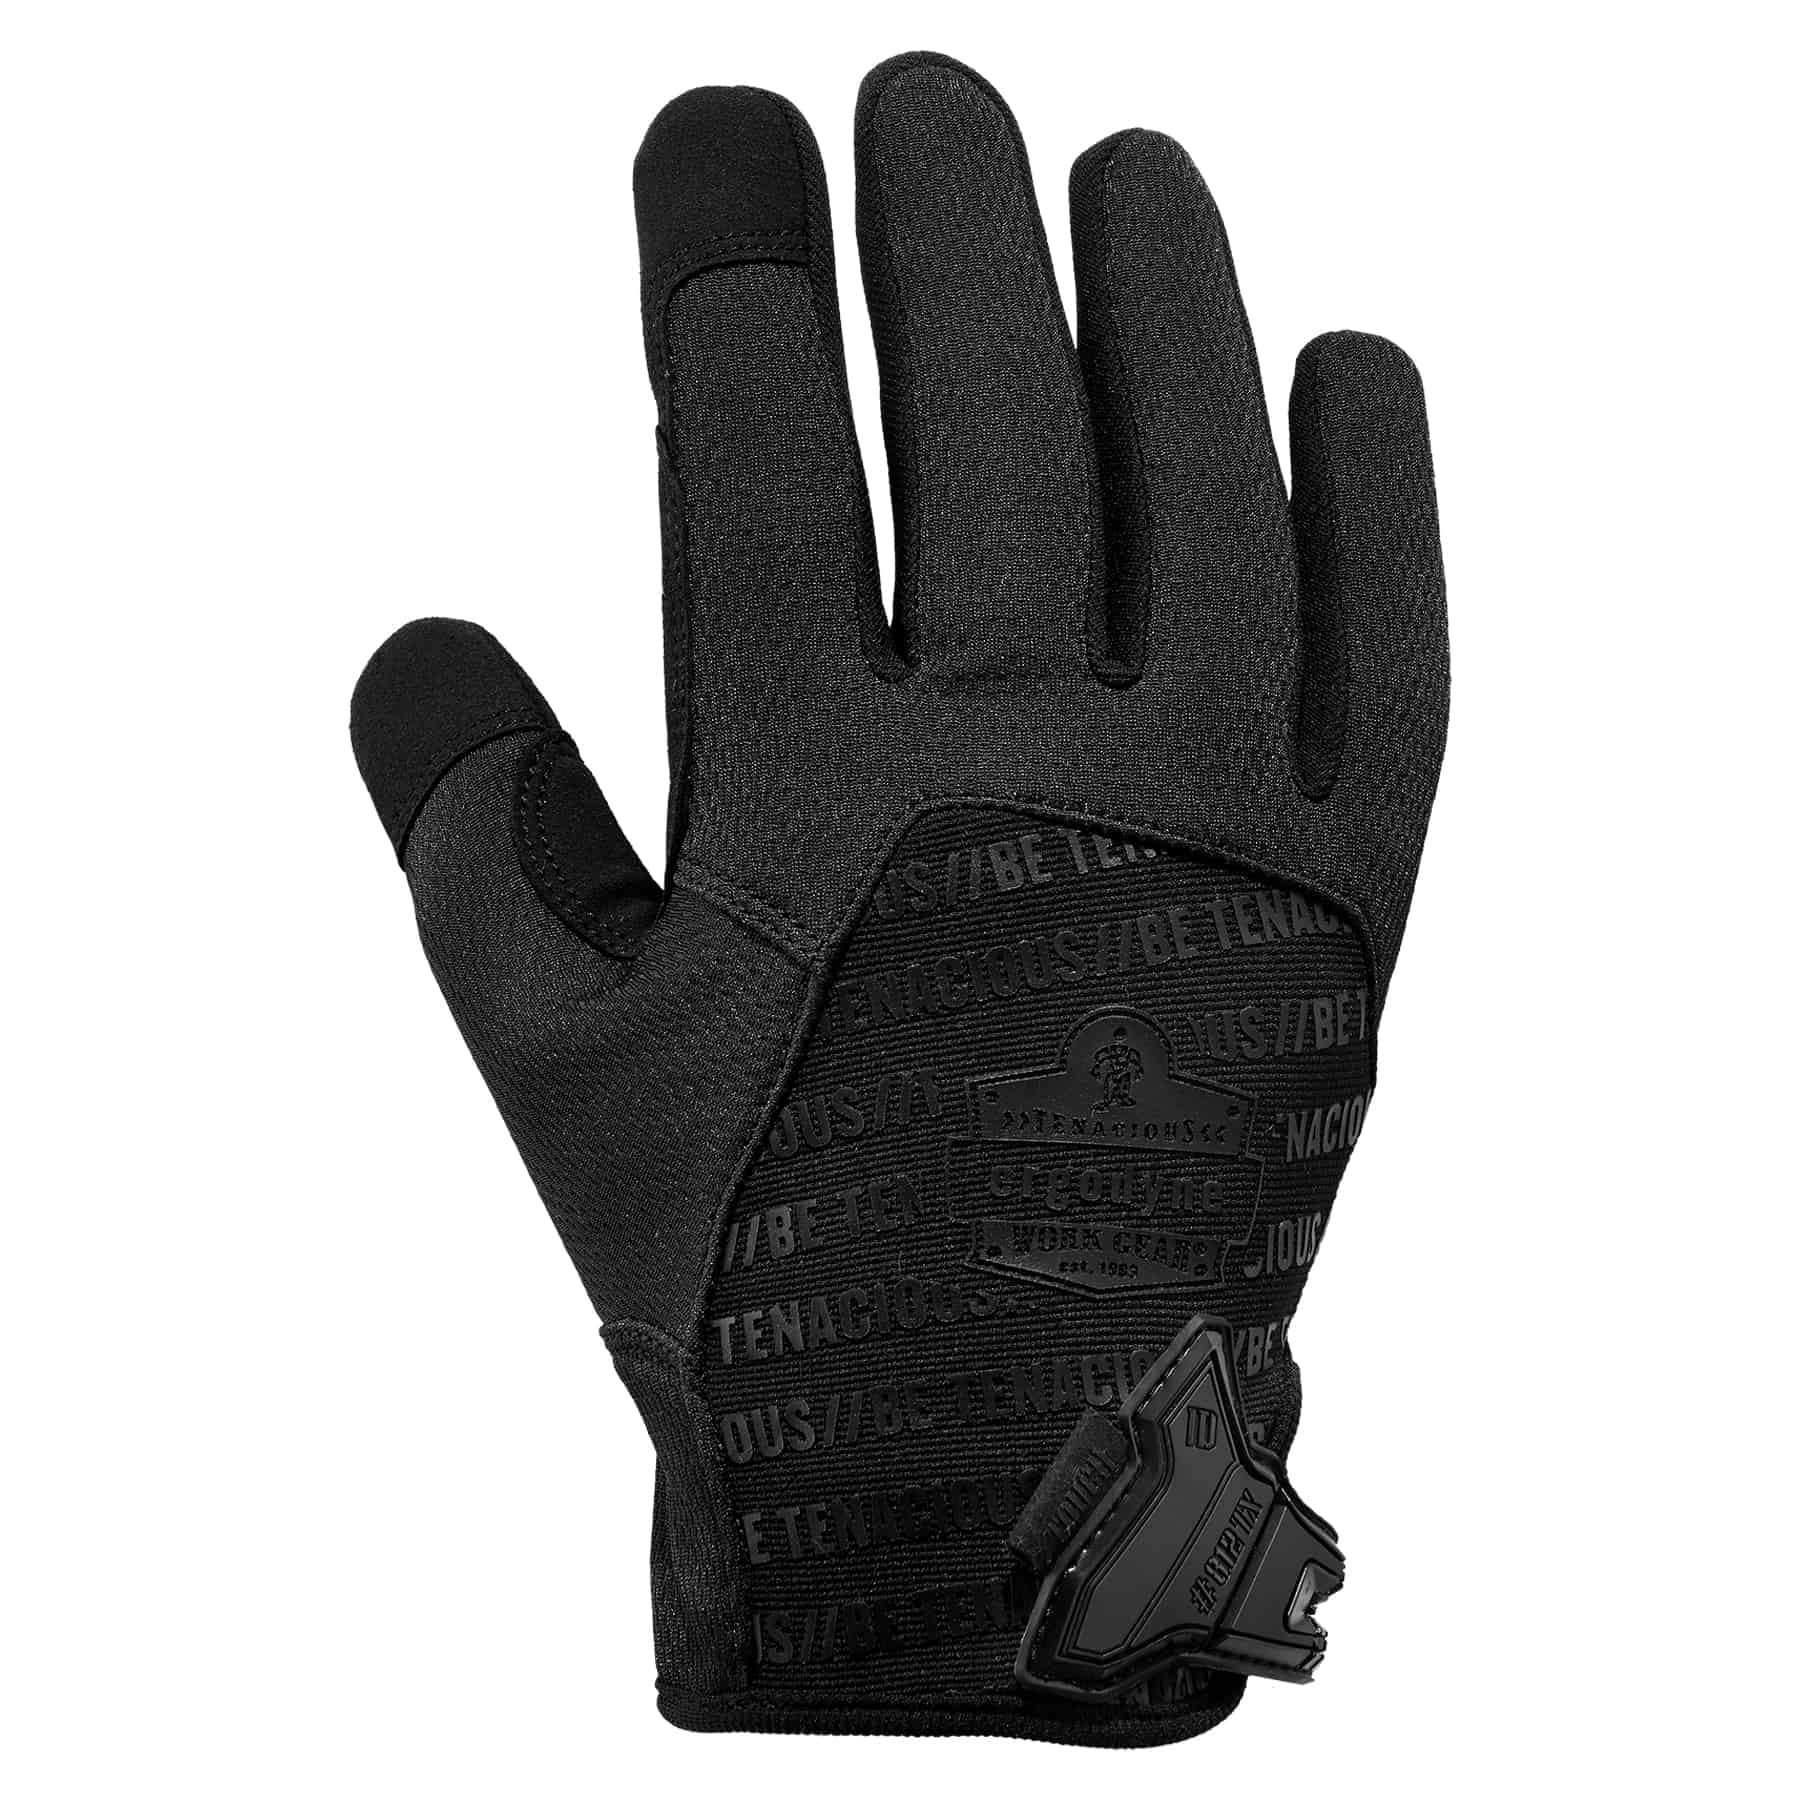 https://www.ergodyne.com/sites/default/files/product-images/17576-812blk-high-dexterity-black-tactical-gloves-dorsal.jpg